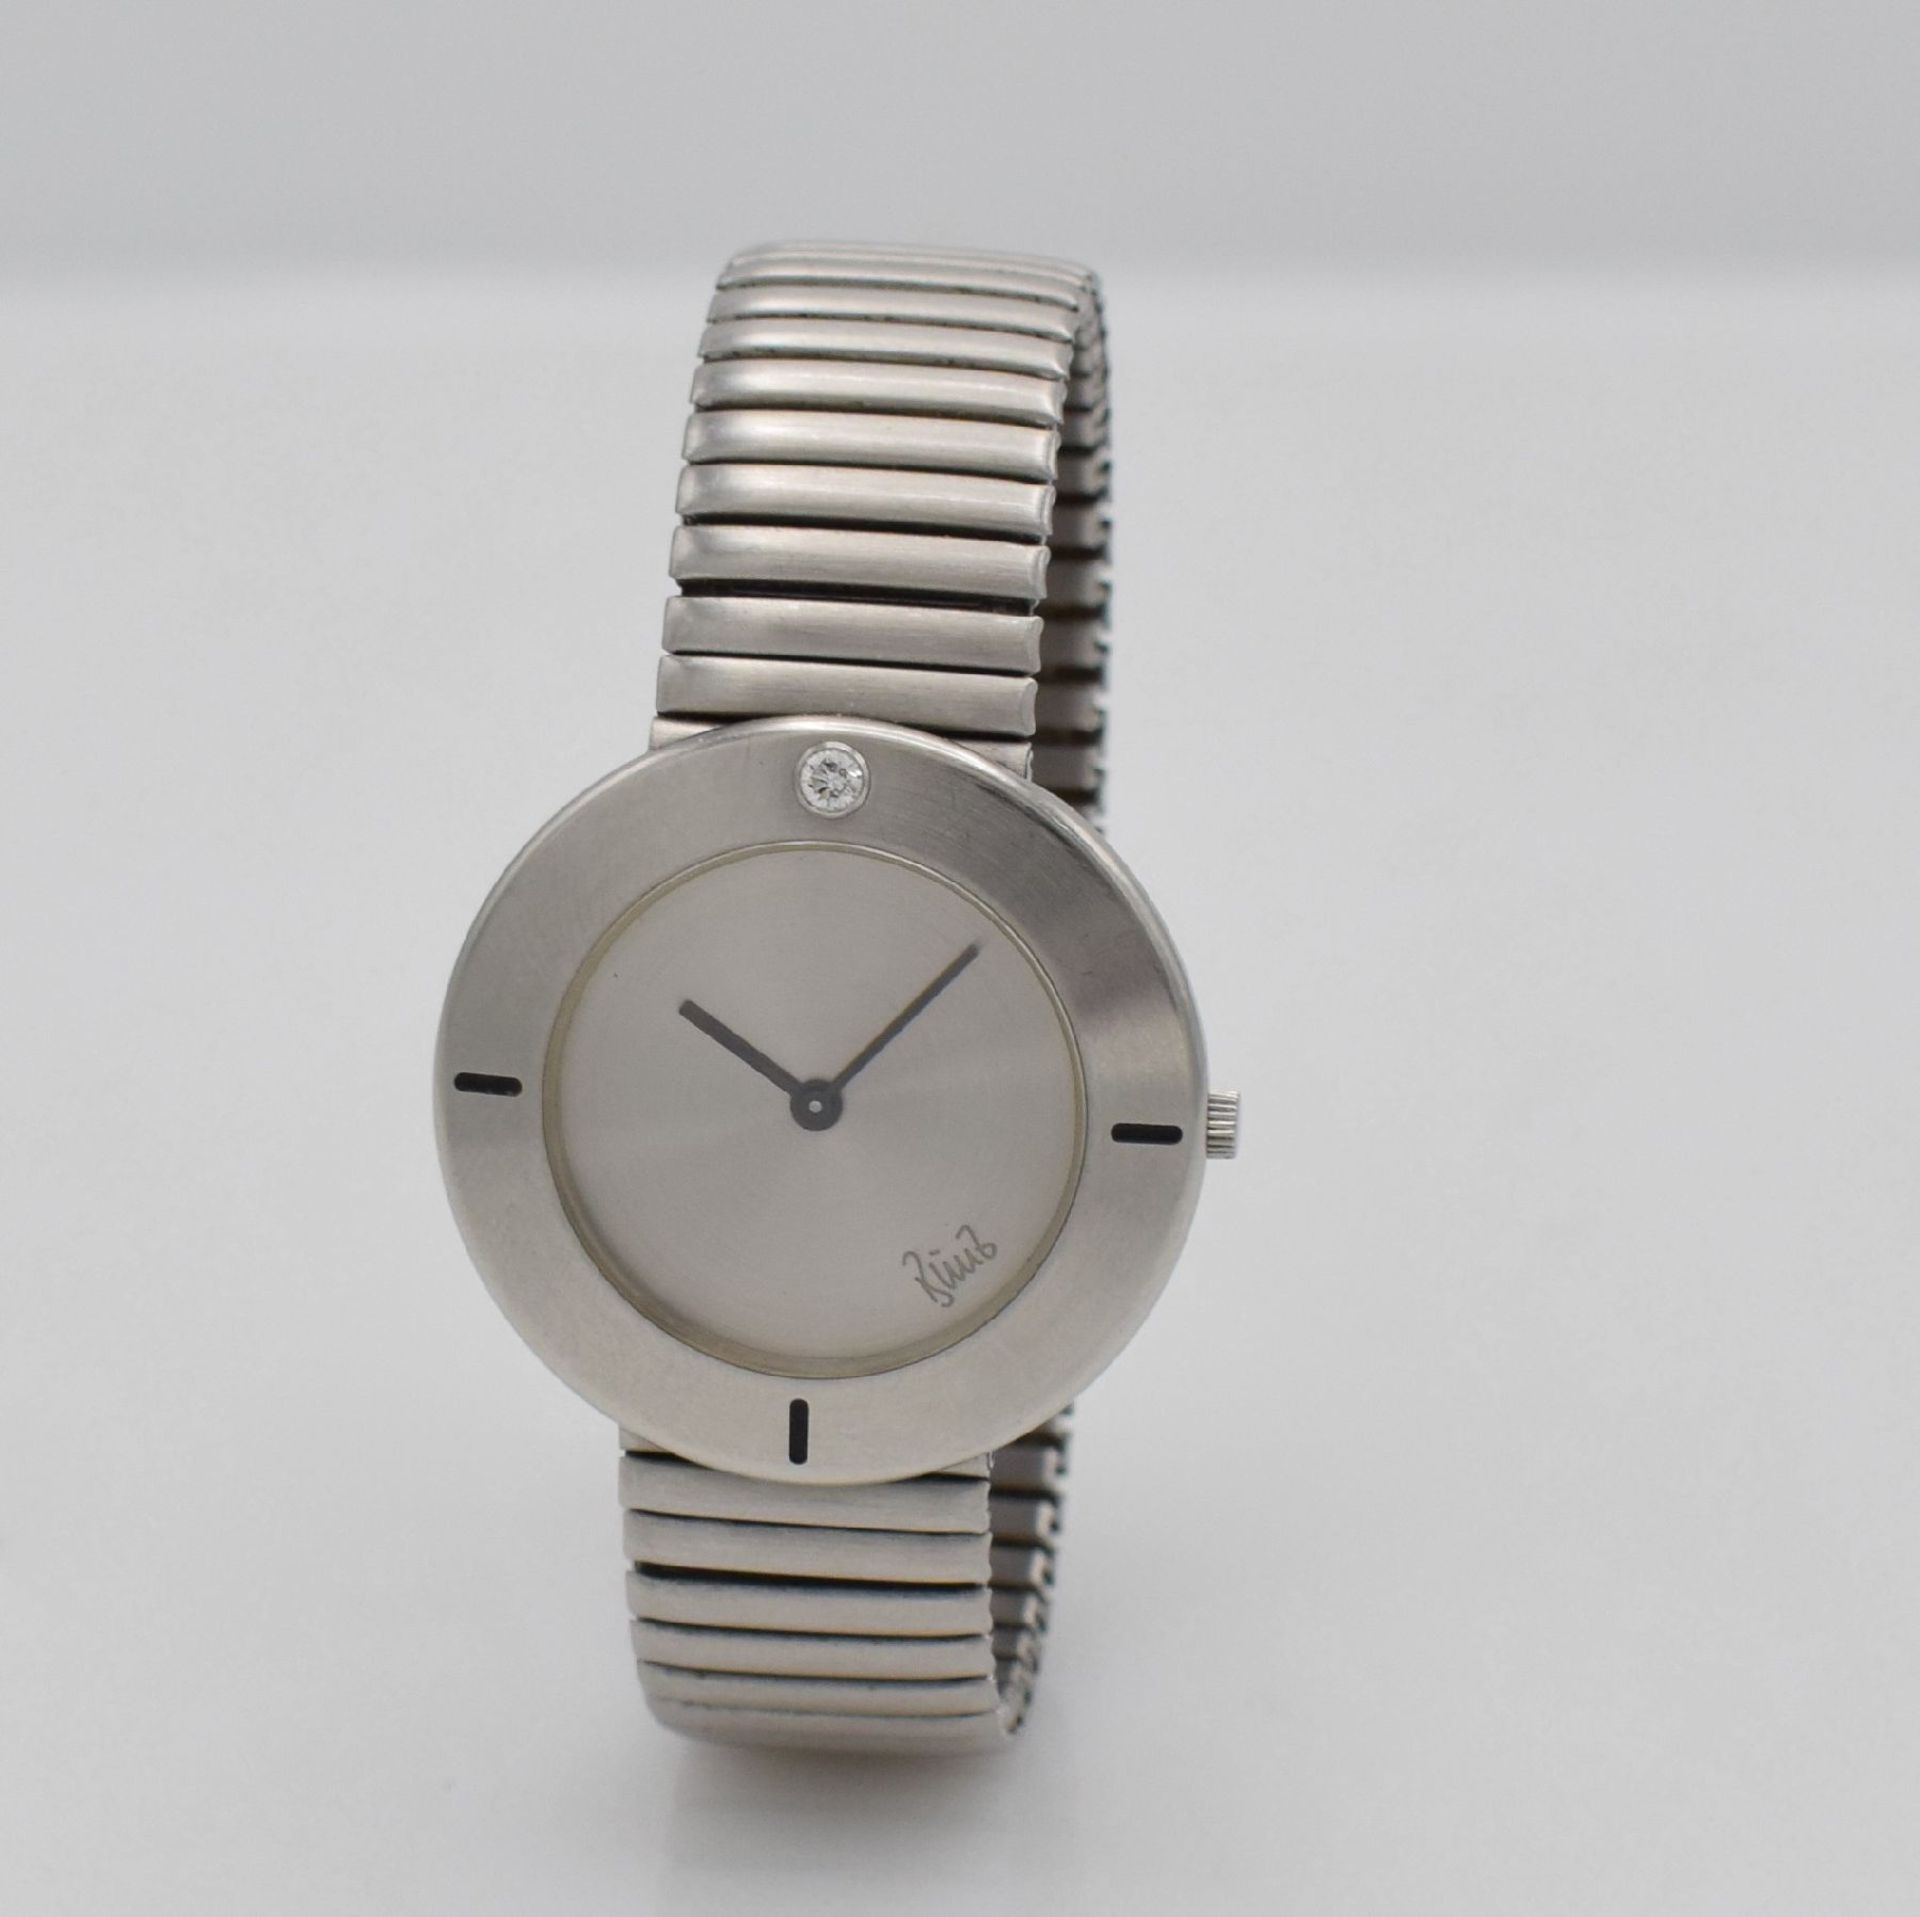 BUNZ wristwatch in stainless steel with diamond, Switzerland sold according to papers in November - Bild 3 aus 8